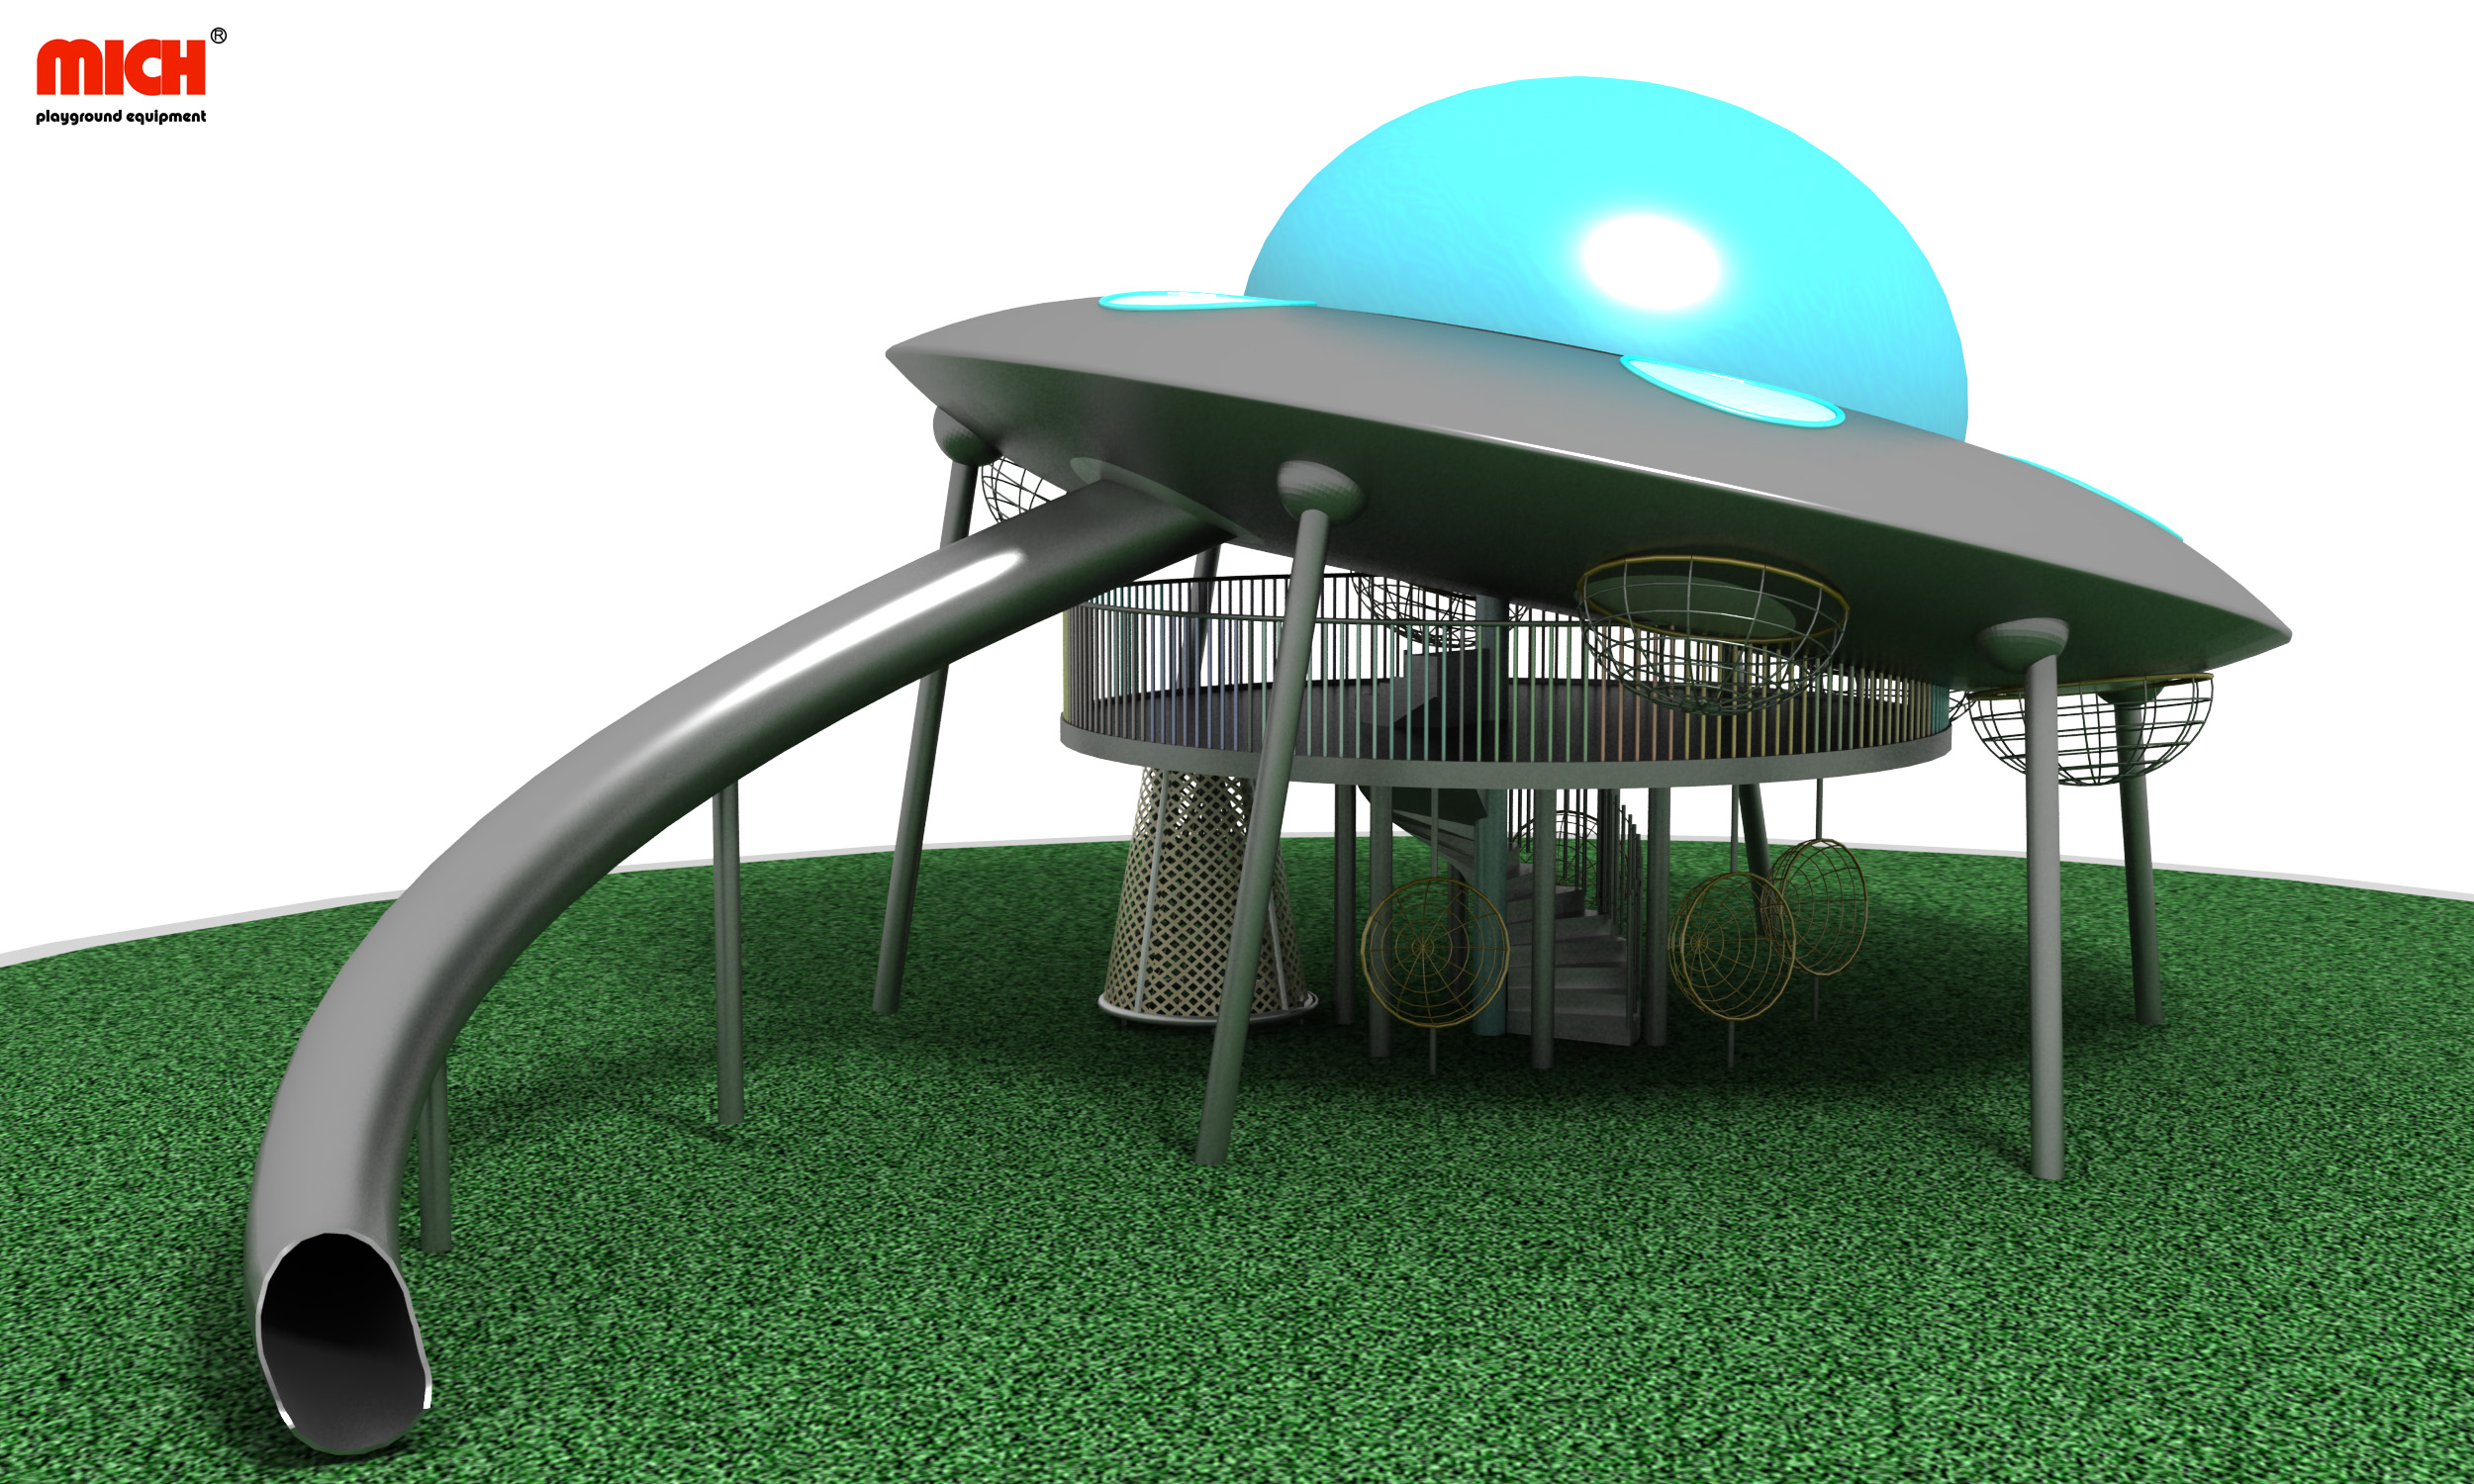 UFO Spaceship Unique Outdoor Play Structure